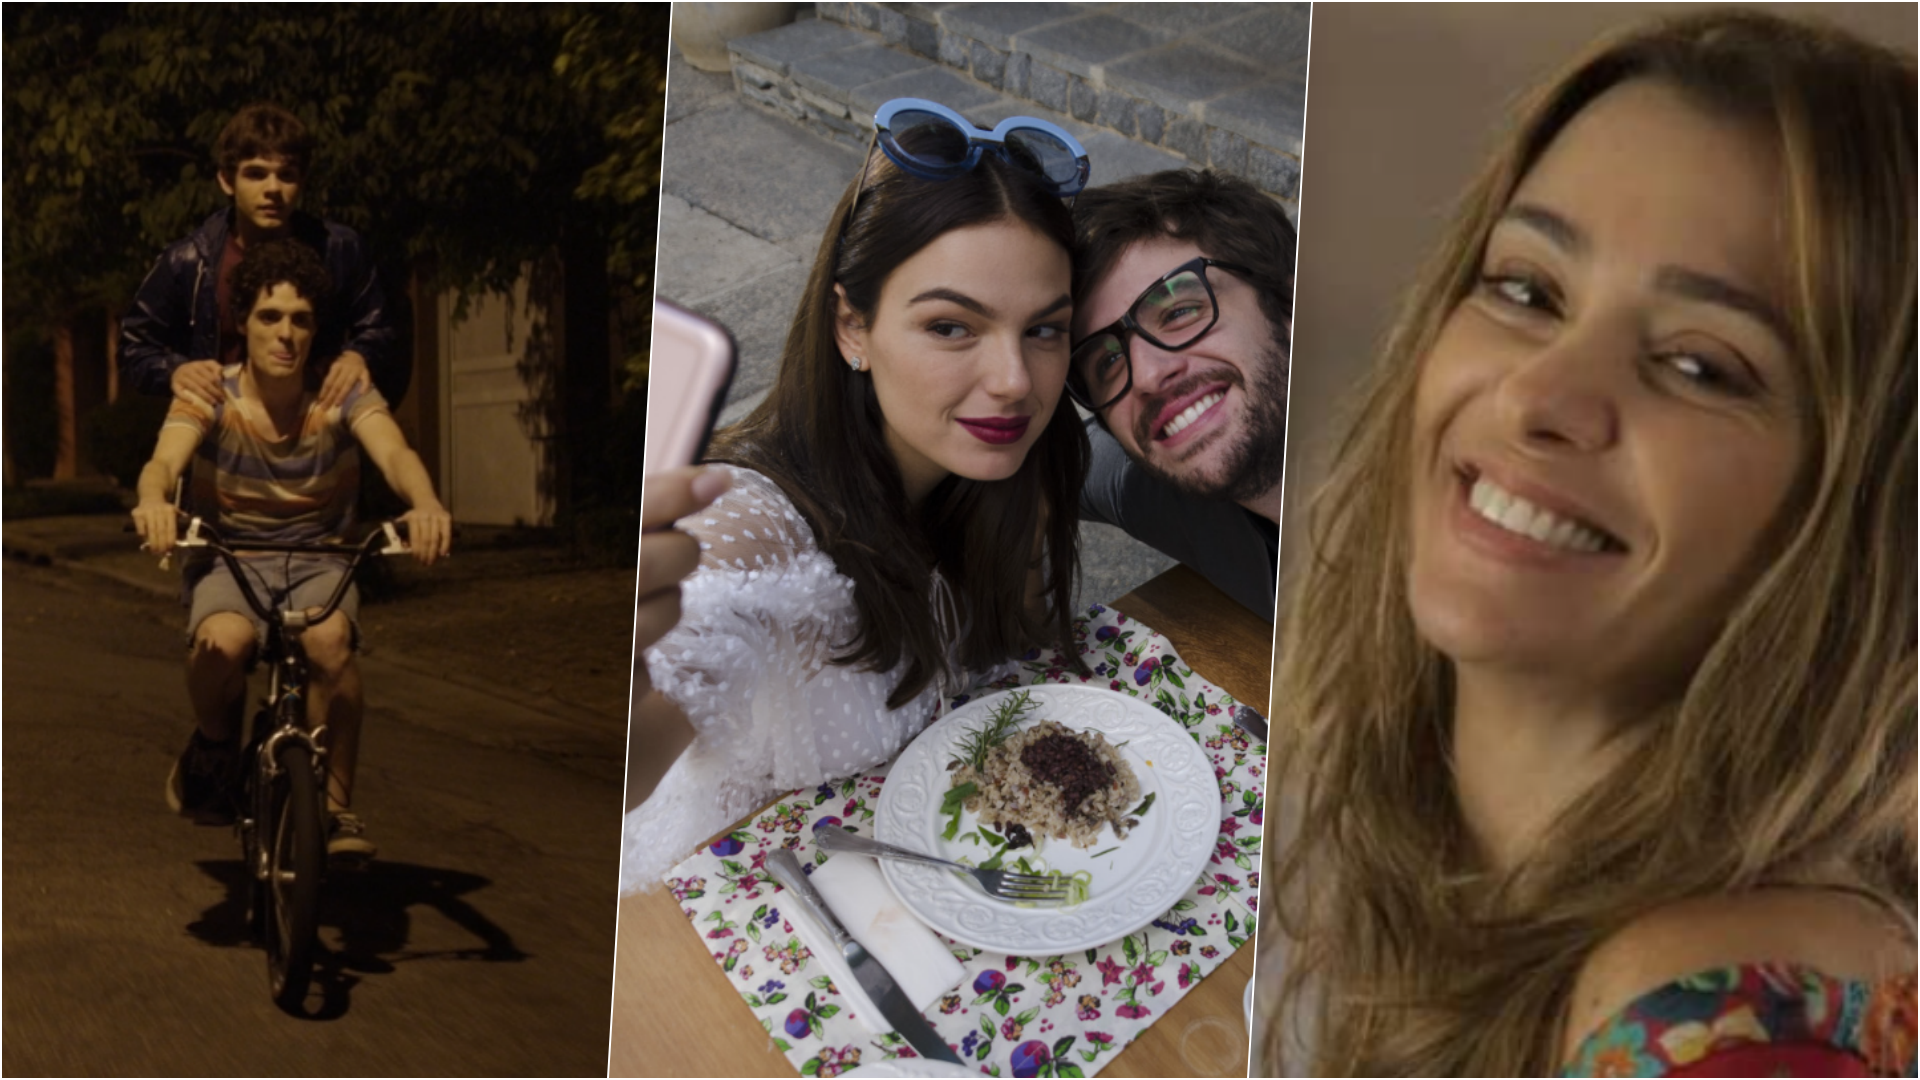 Nova comédia romântica brasileira já está disponível na Netflix – O Presente